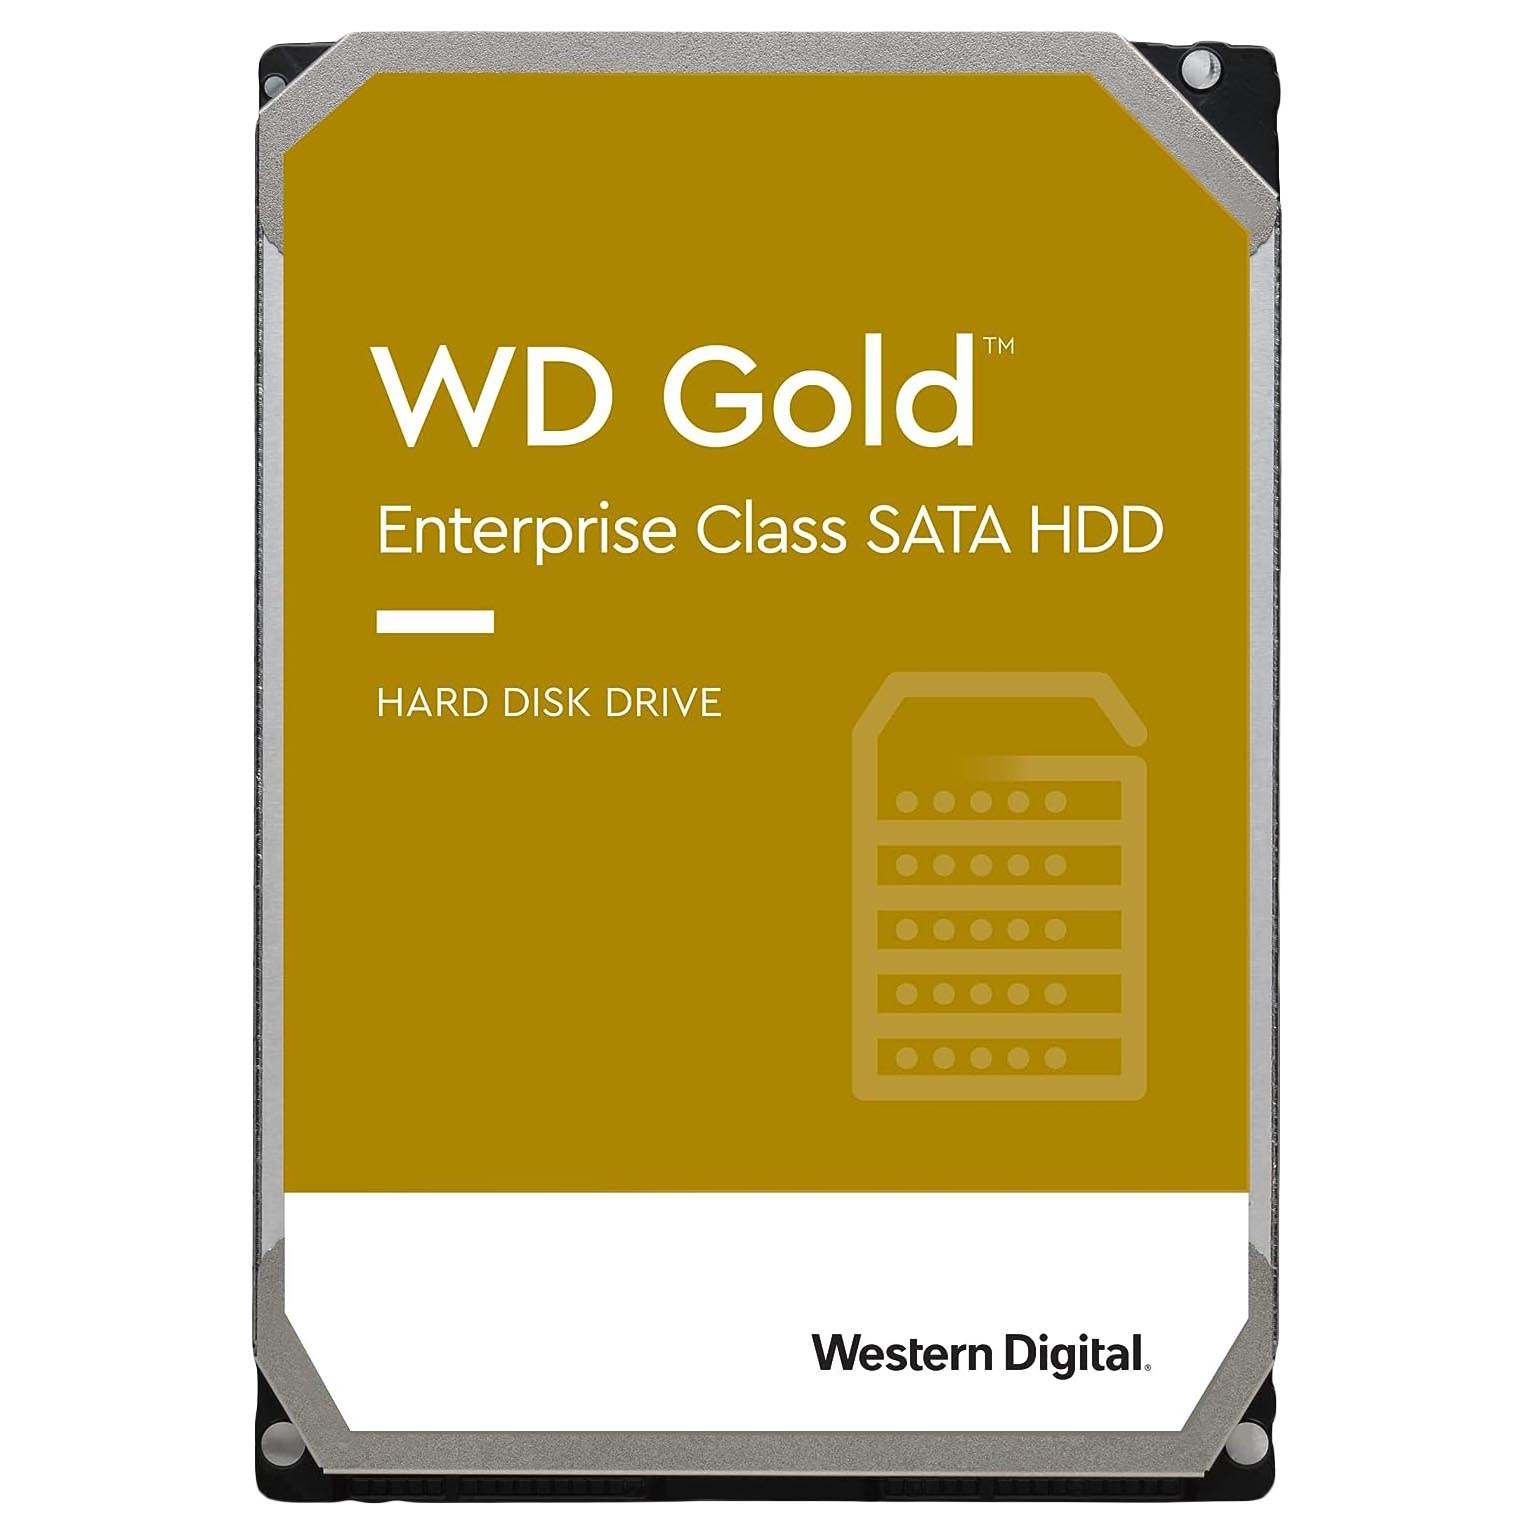 цена Внутренний жесткий диск Western Digital WD Gold Enterprise Class, WD6003VRYZ, 6Тб